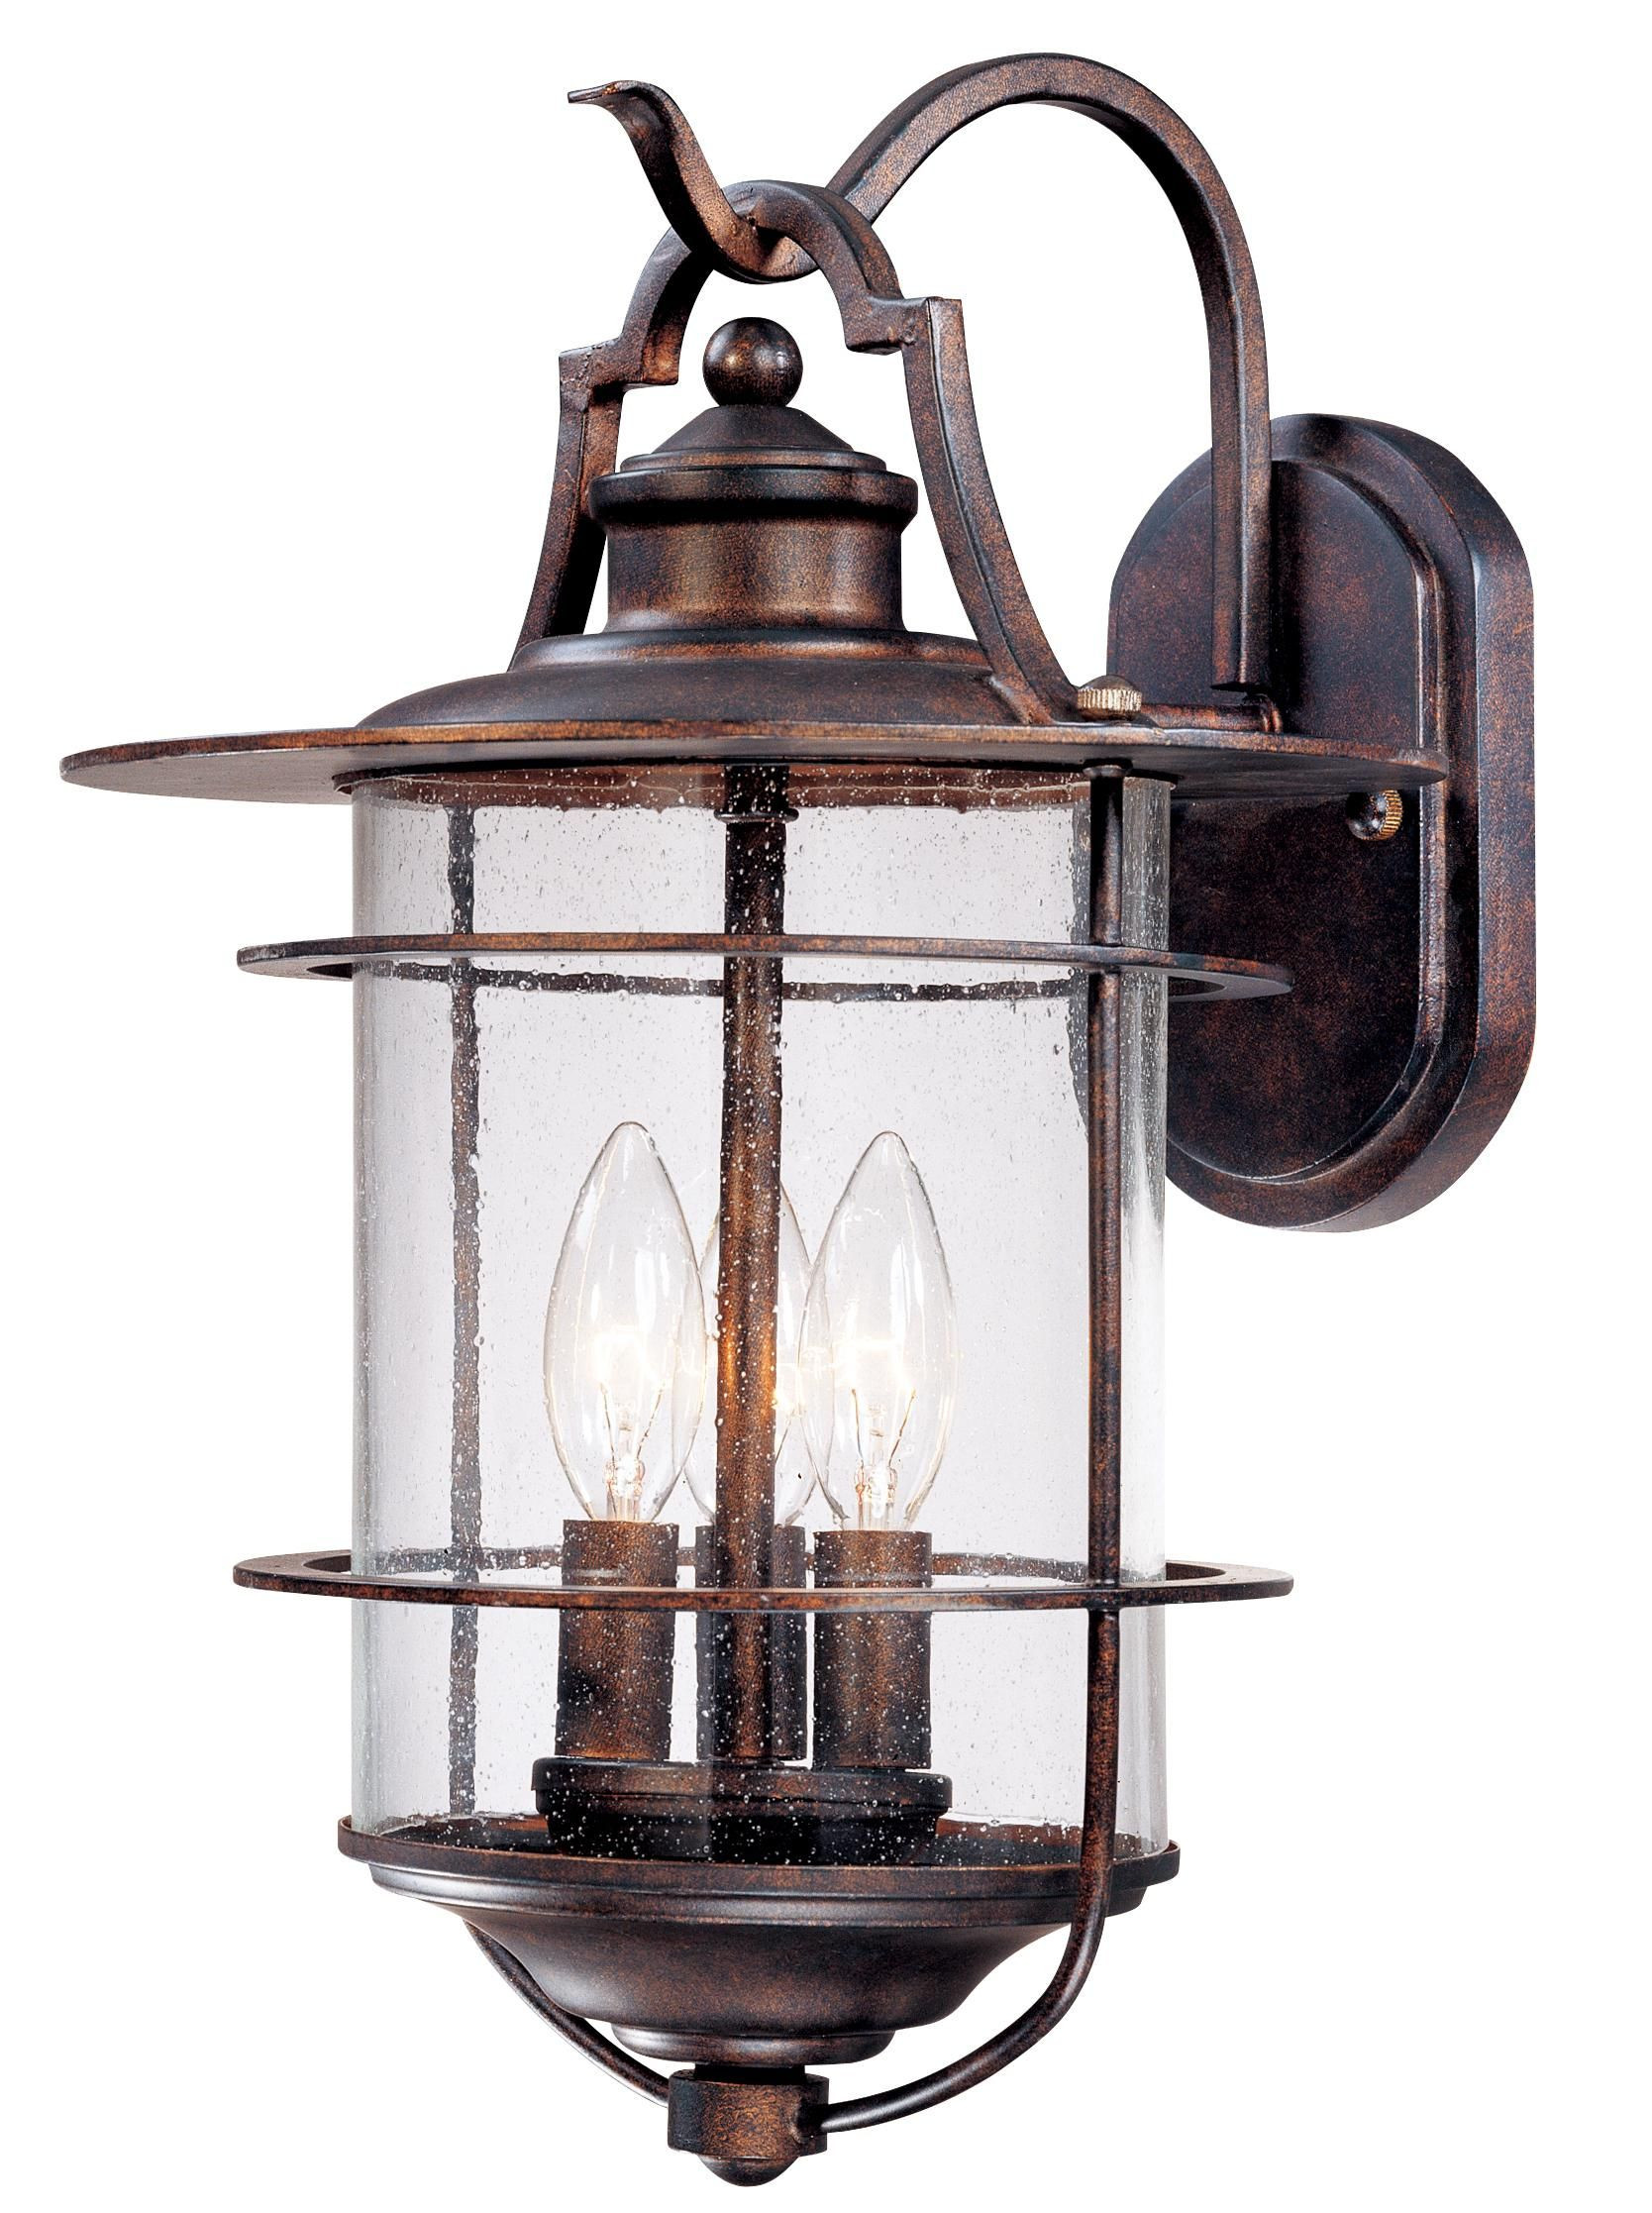 Best ideas about Franklin Iron Works Lighting
. Save or Pin Casa Mirada 16 1 4" High Bronze 3 Light Outdoor Wall Light Now.